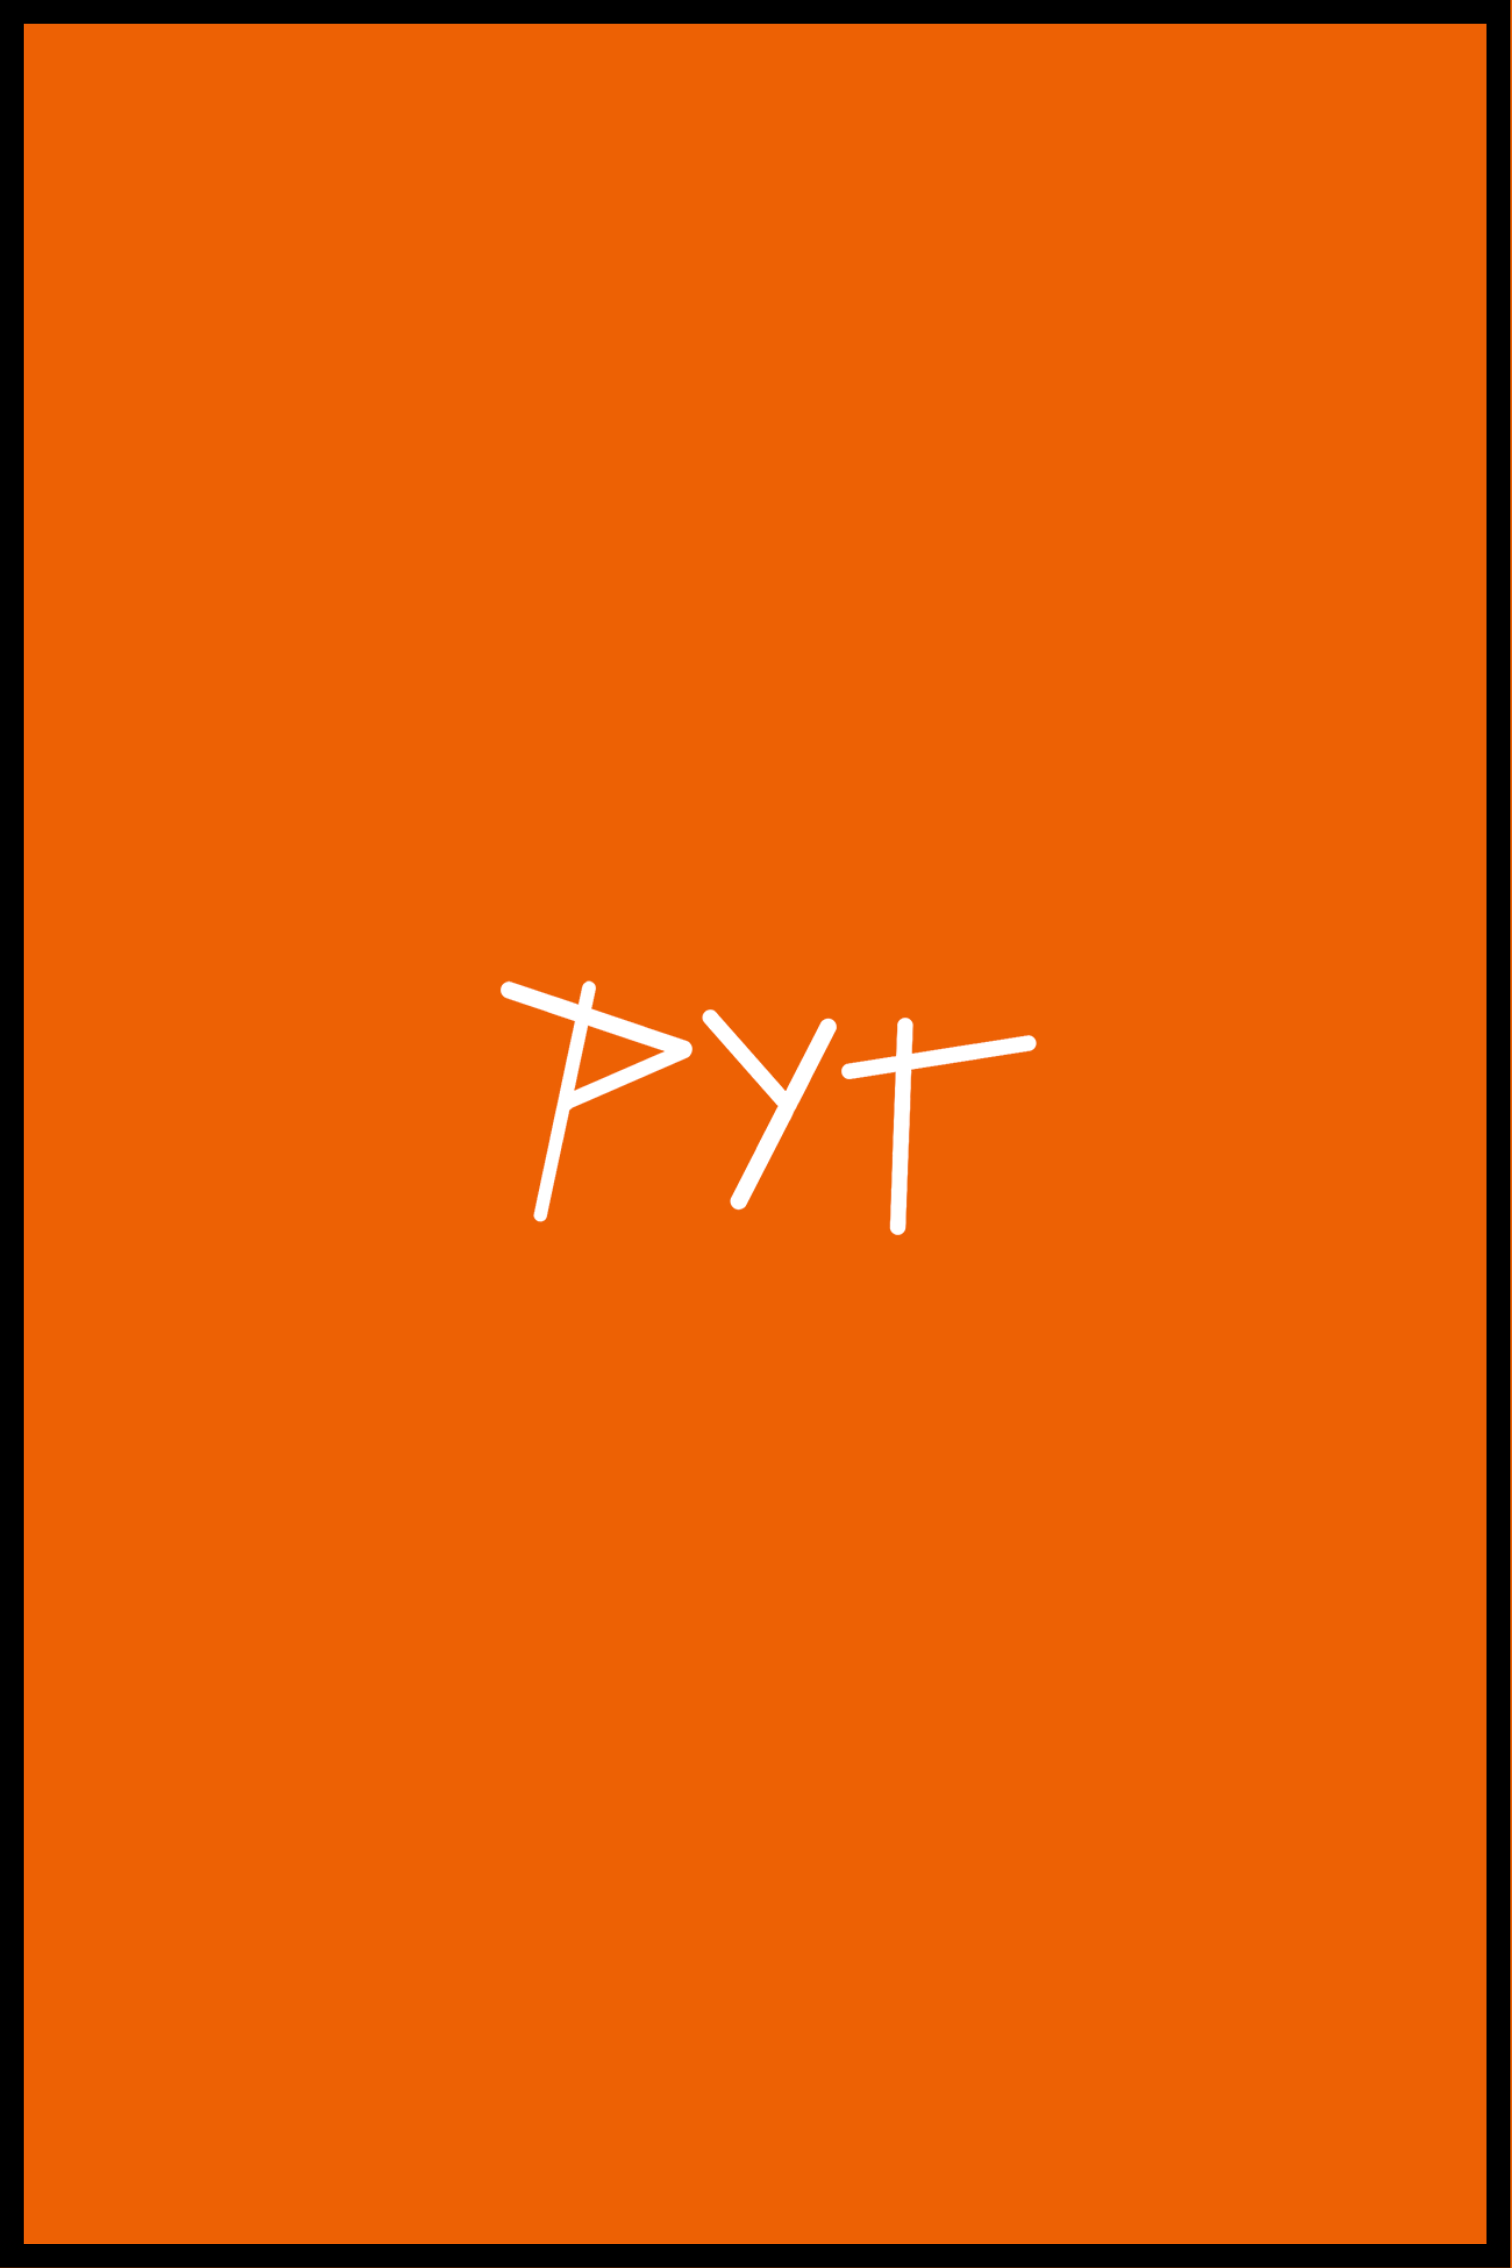 pyt-orange plakat